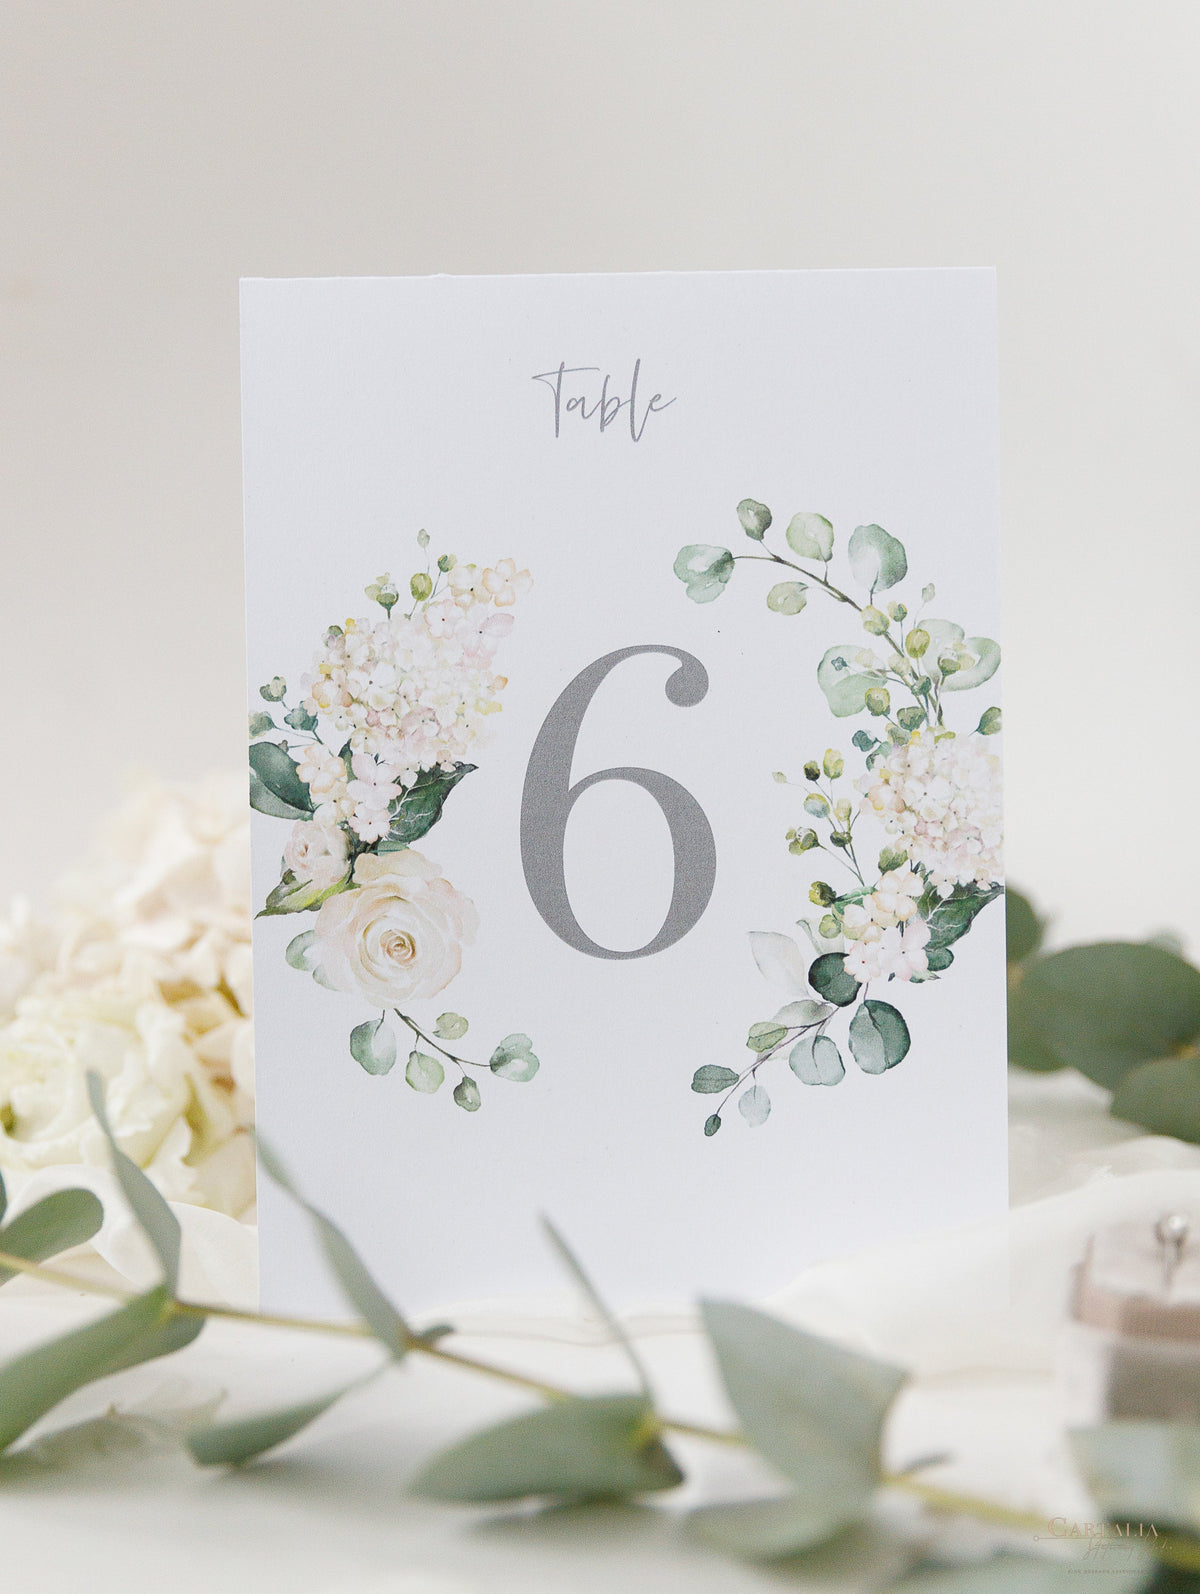 Números de mesa de hortensias blancas